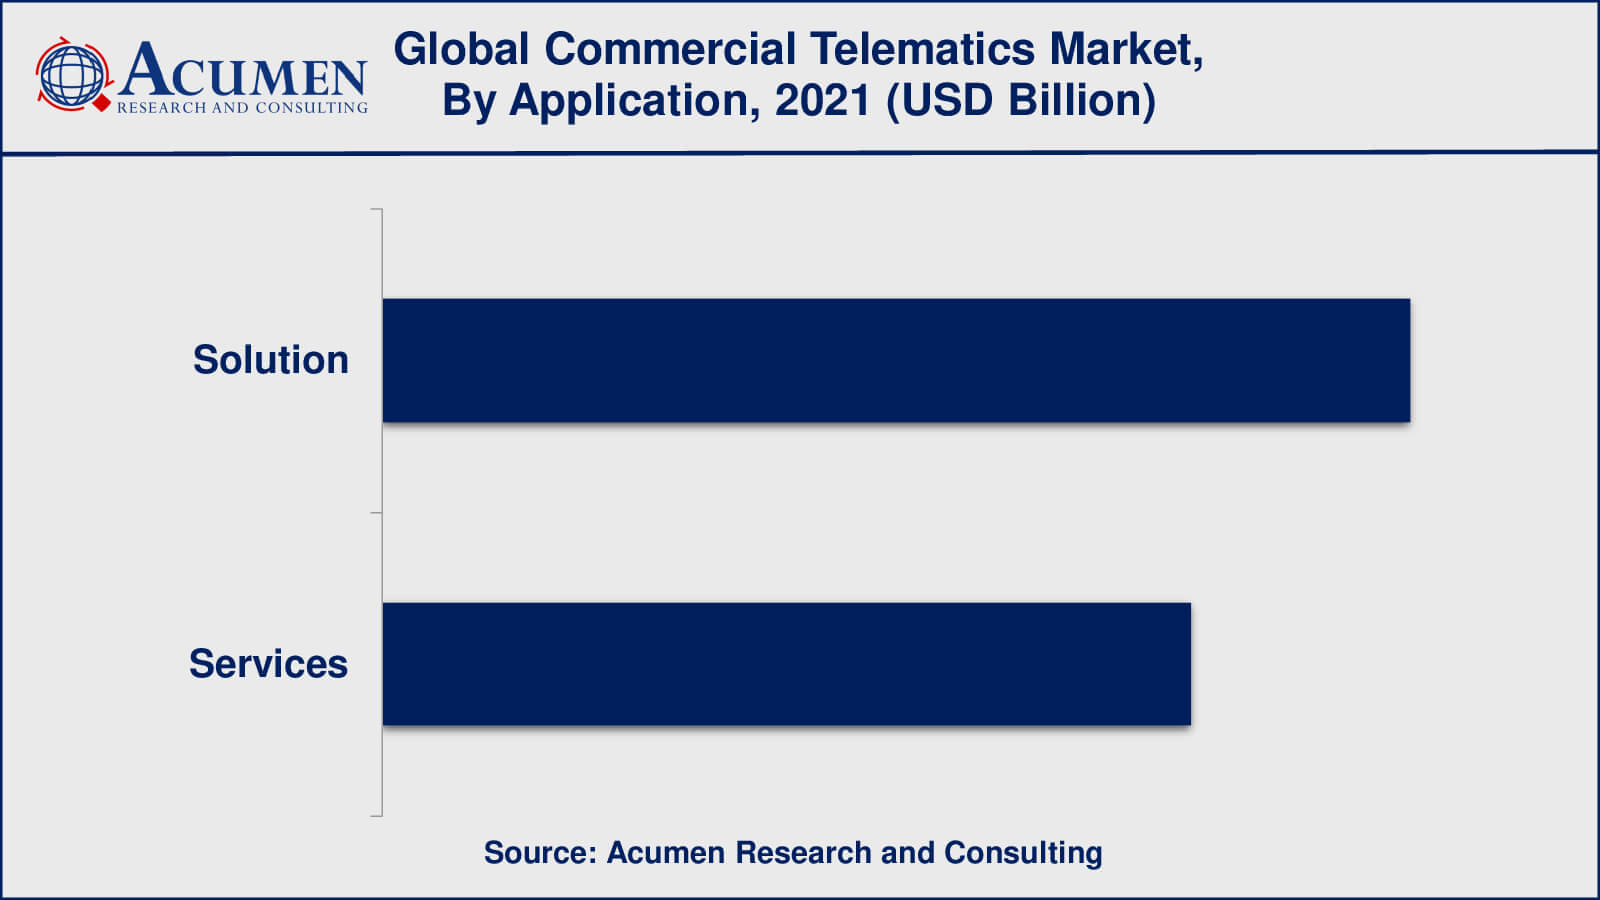 Commercial Telematics Market Insights